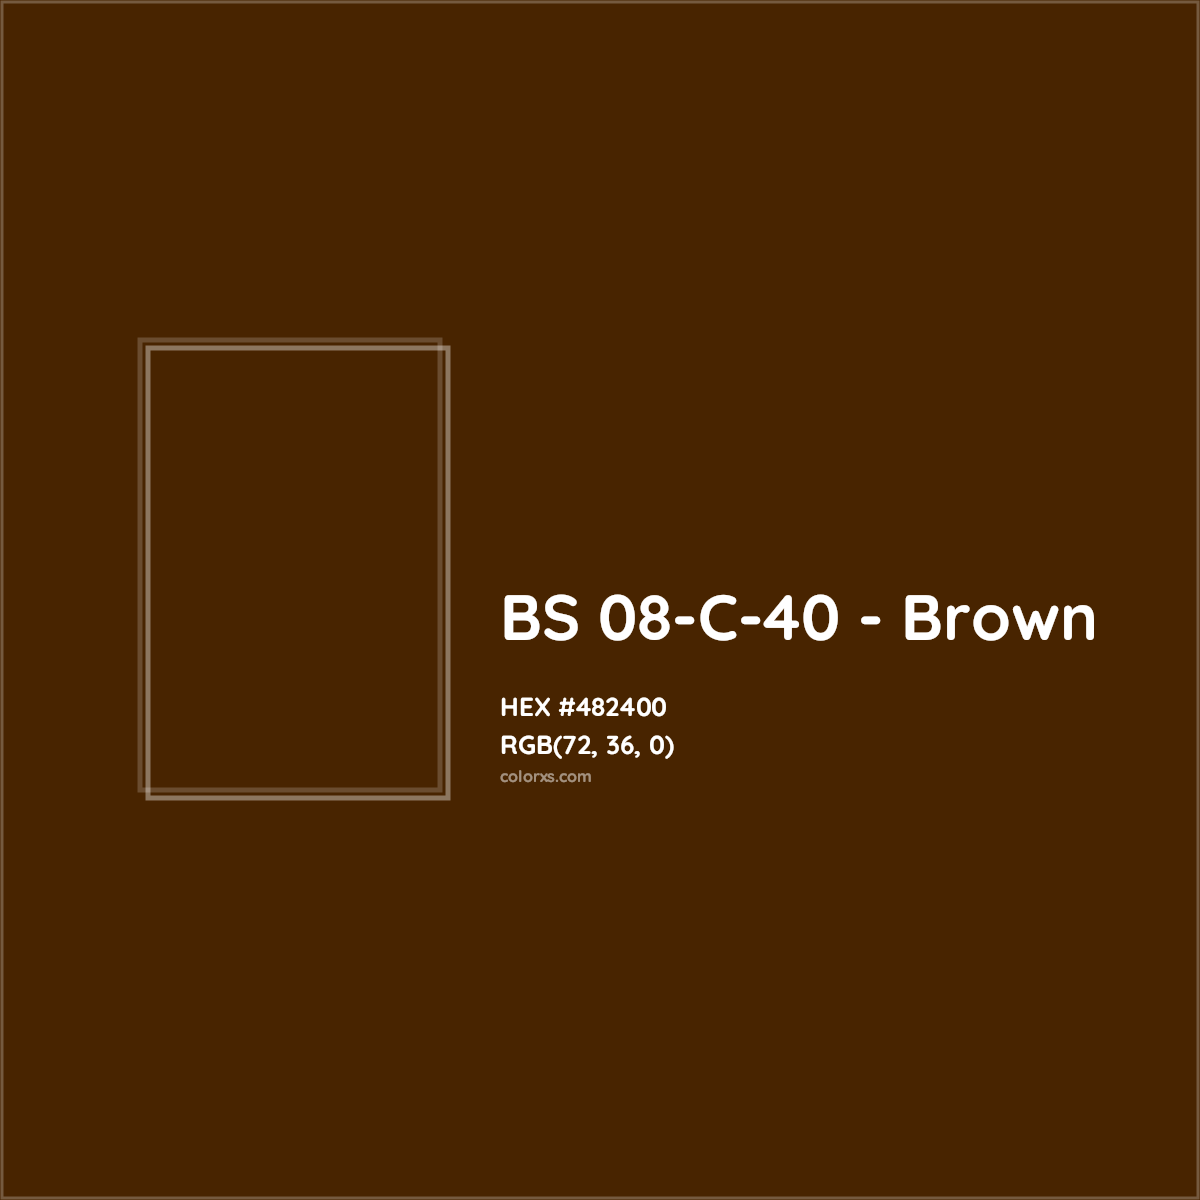 HEX #482400 BS 08-C-40 - Brown CMS British Standard 4800 - Color Code